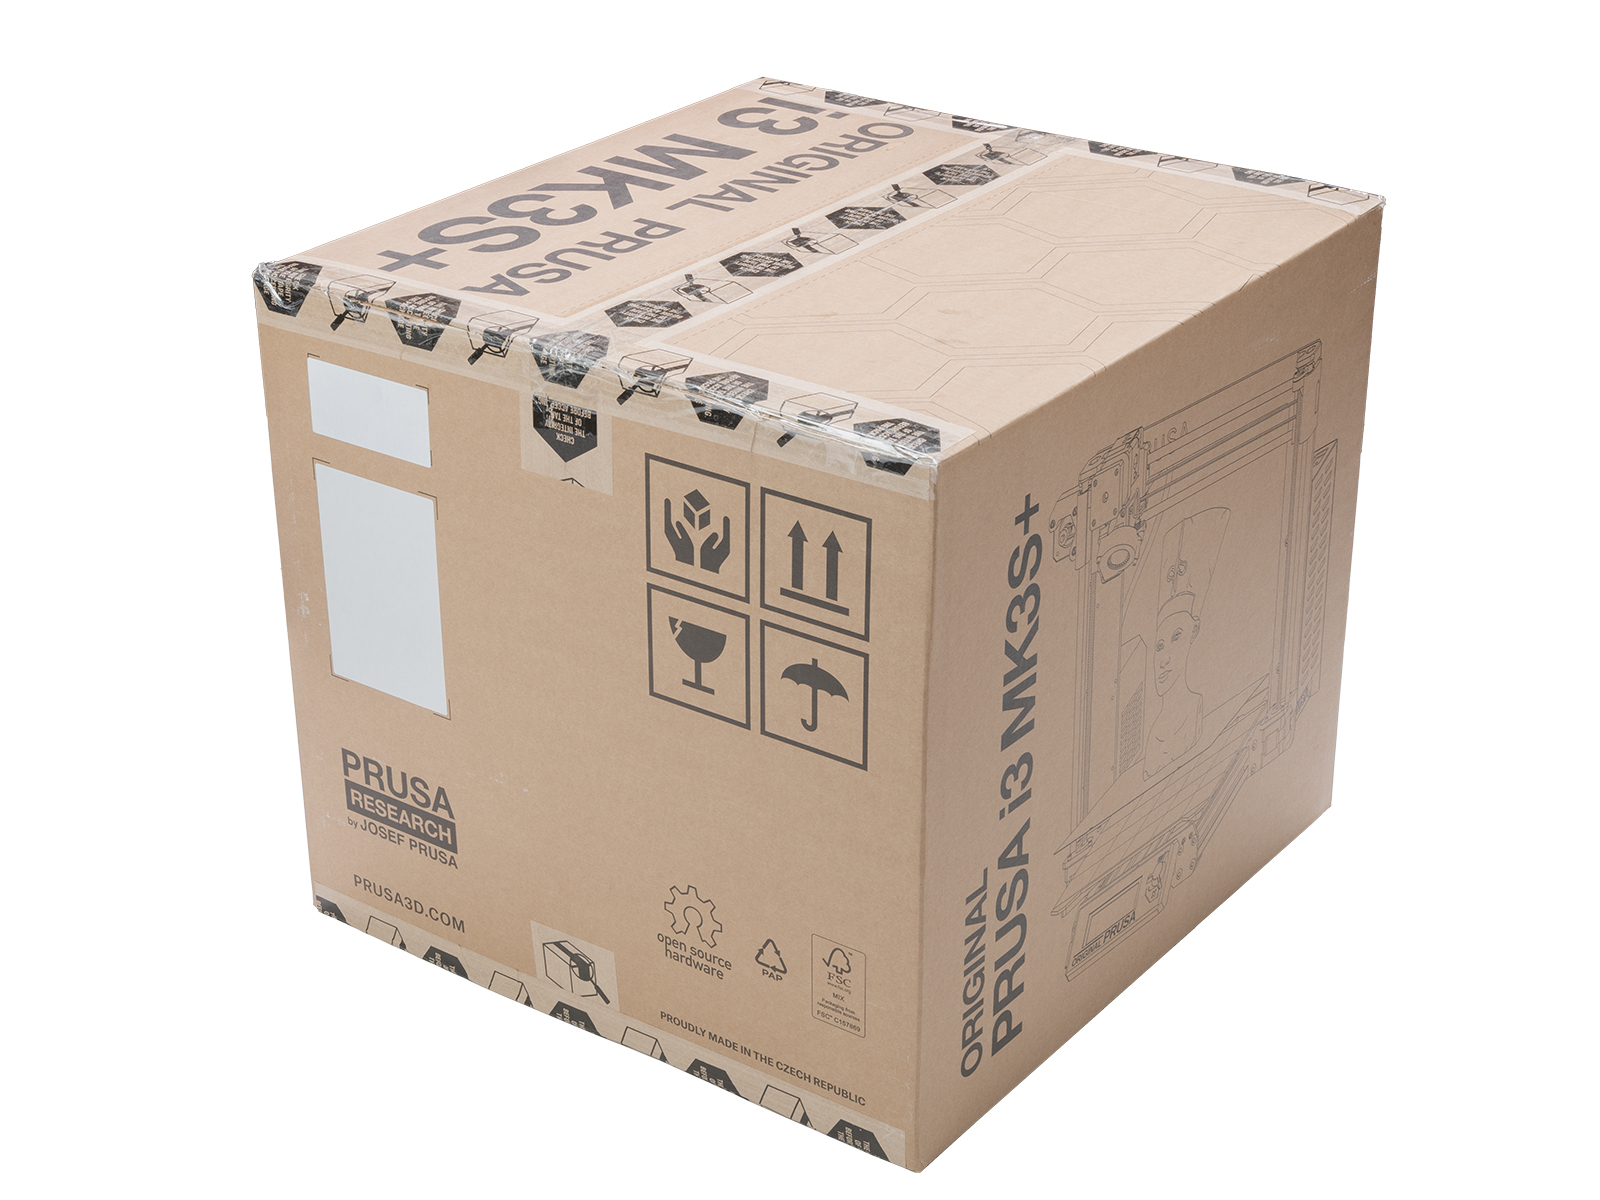 Verpackung des i3-Druckers für die Rücksendung - Original Verpackungsmaterial